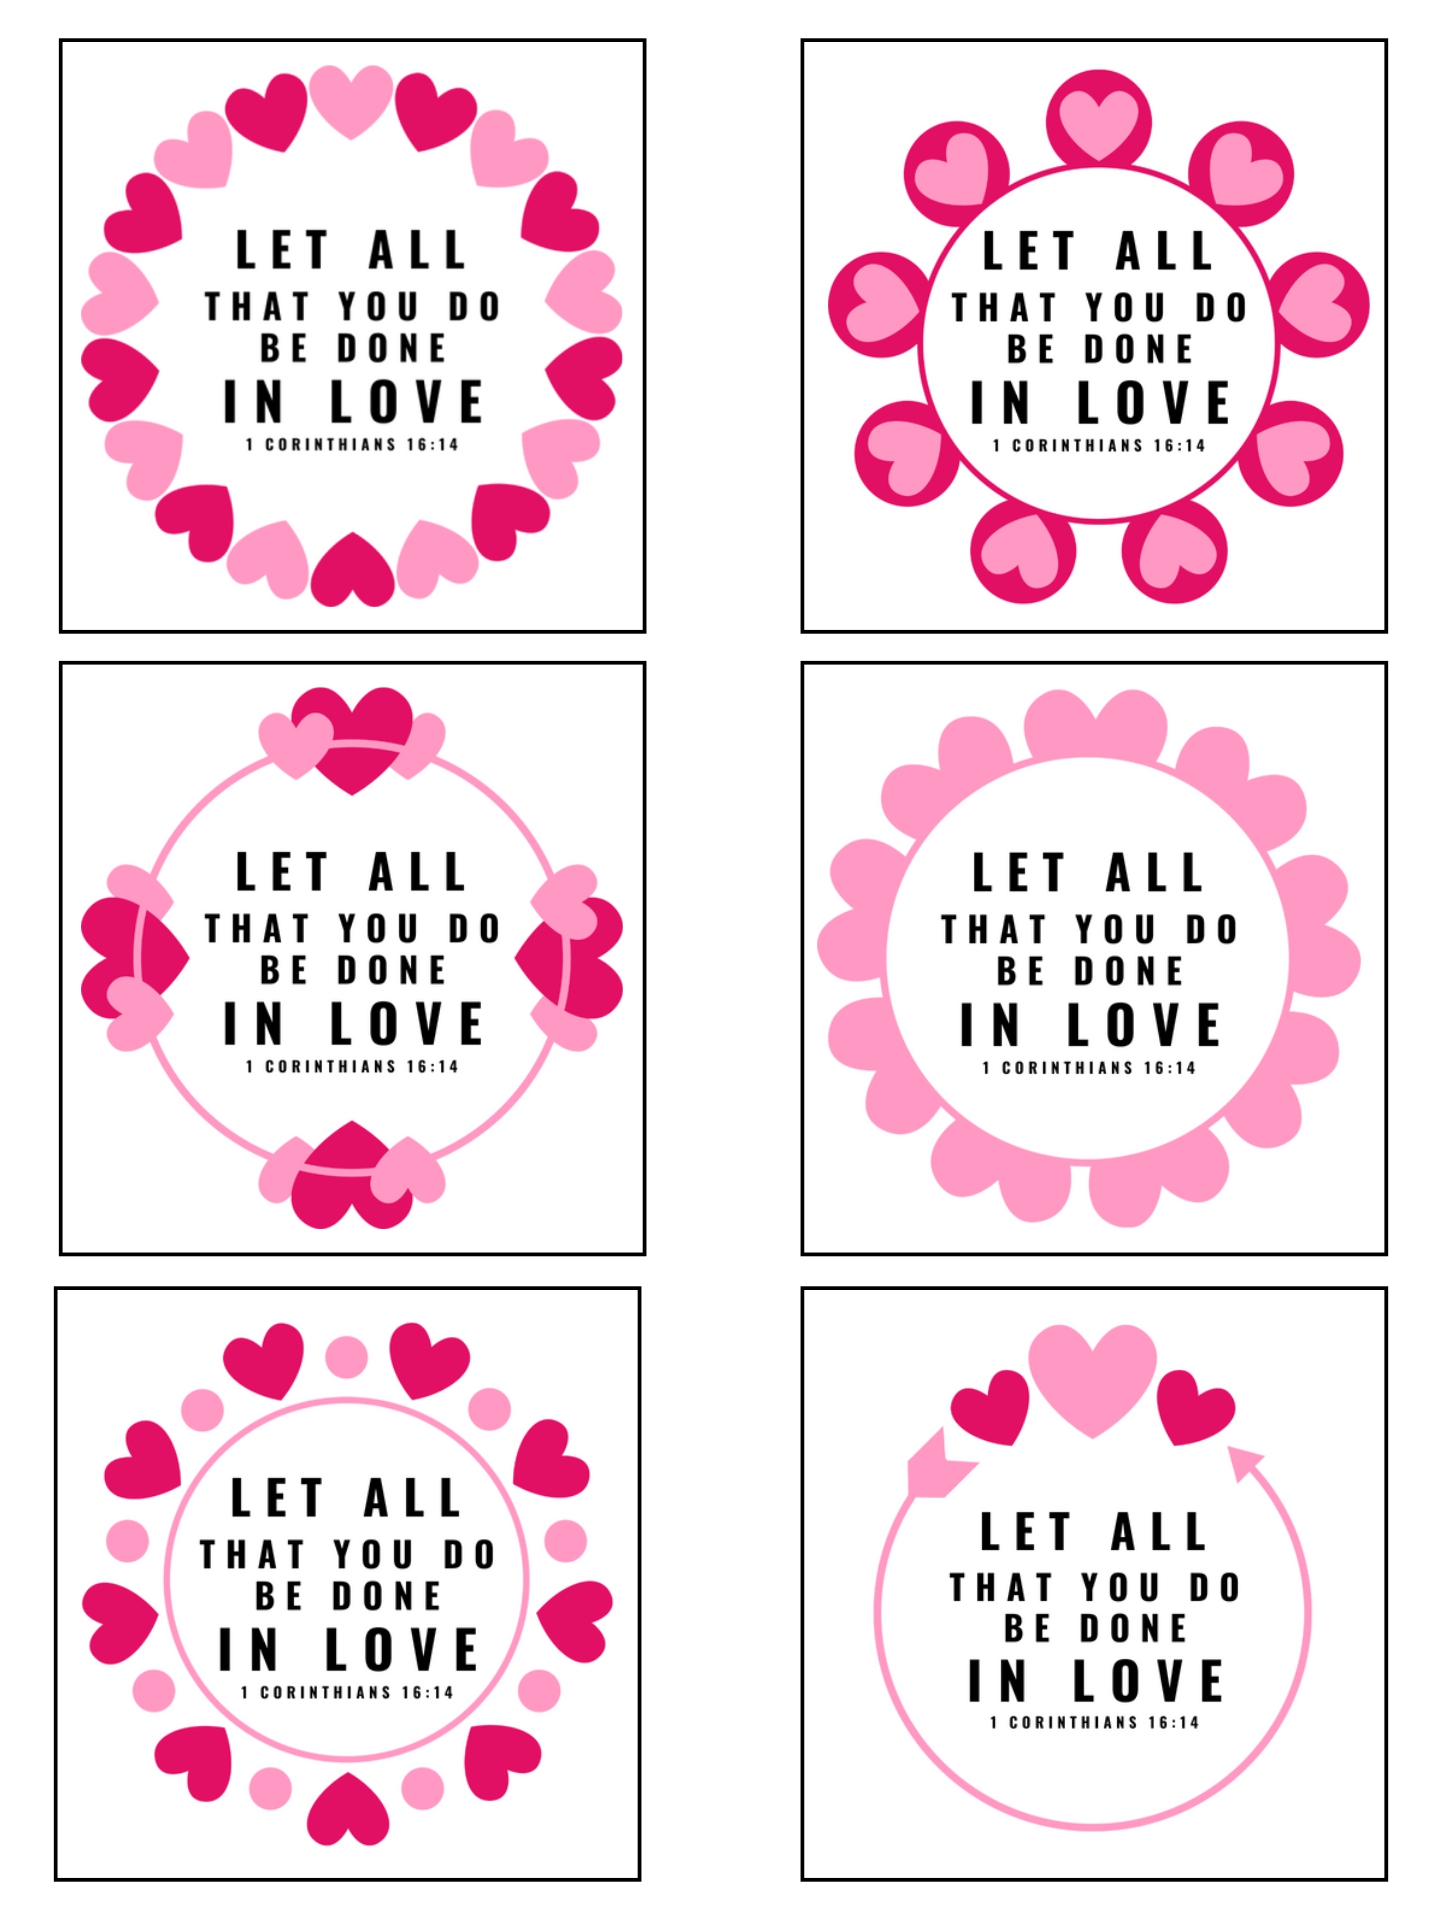 Printable Christian Valentine Cards